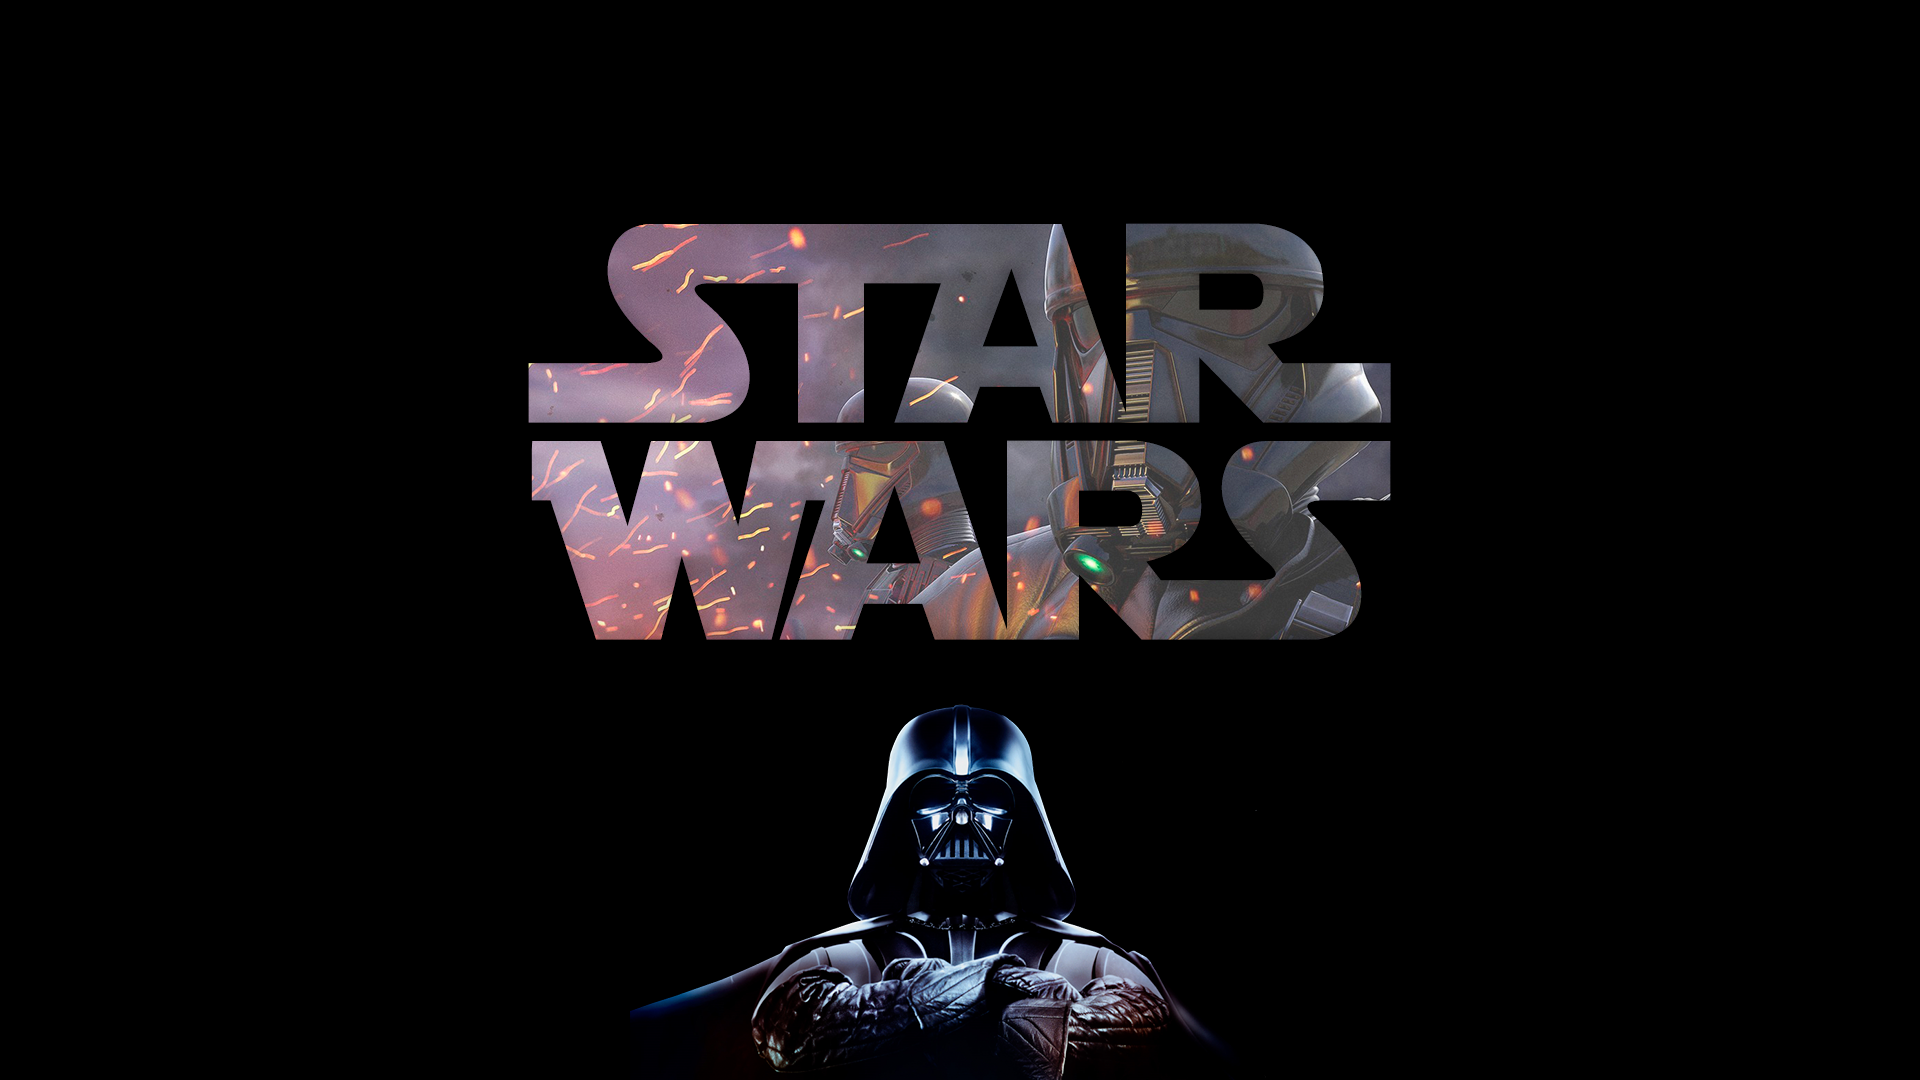 General 1920x1080 Star Wars Darth Vader typography